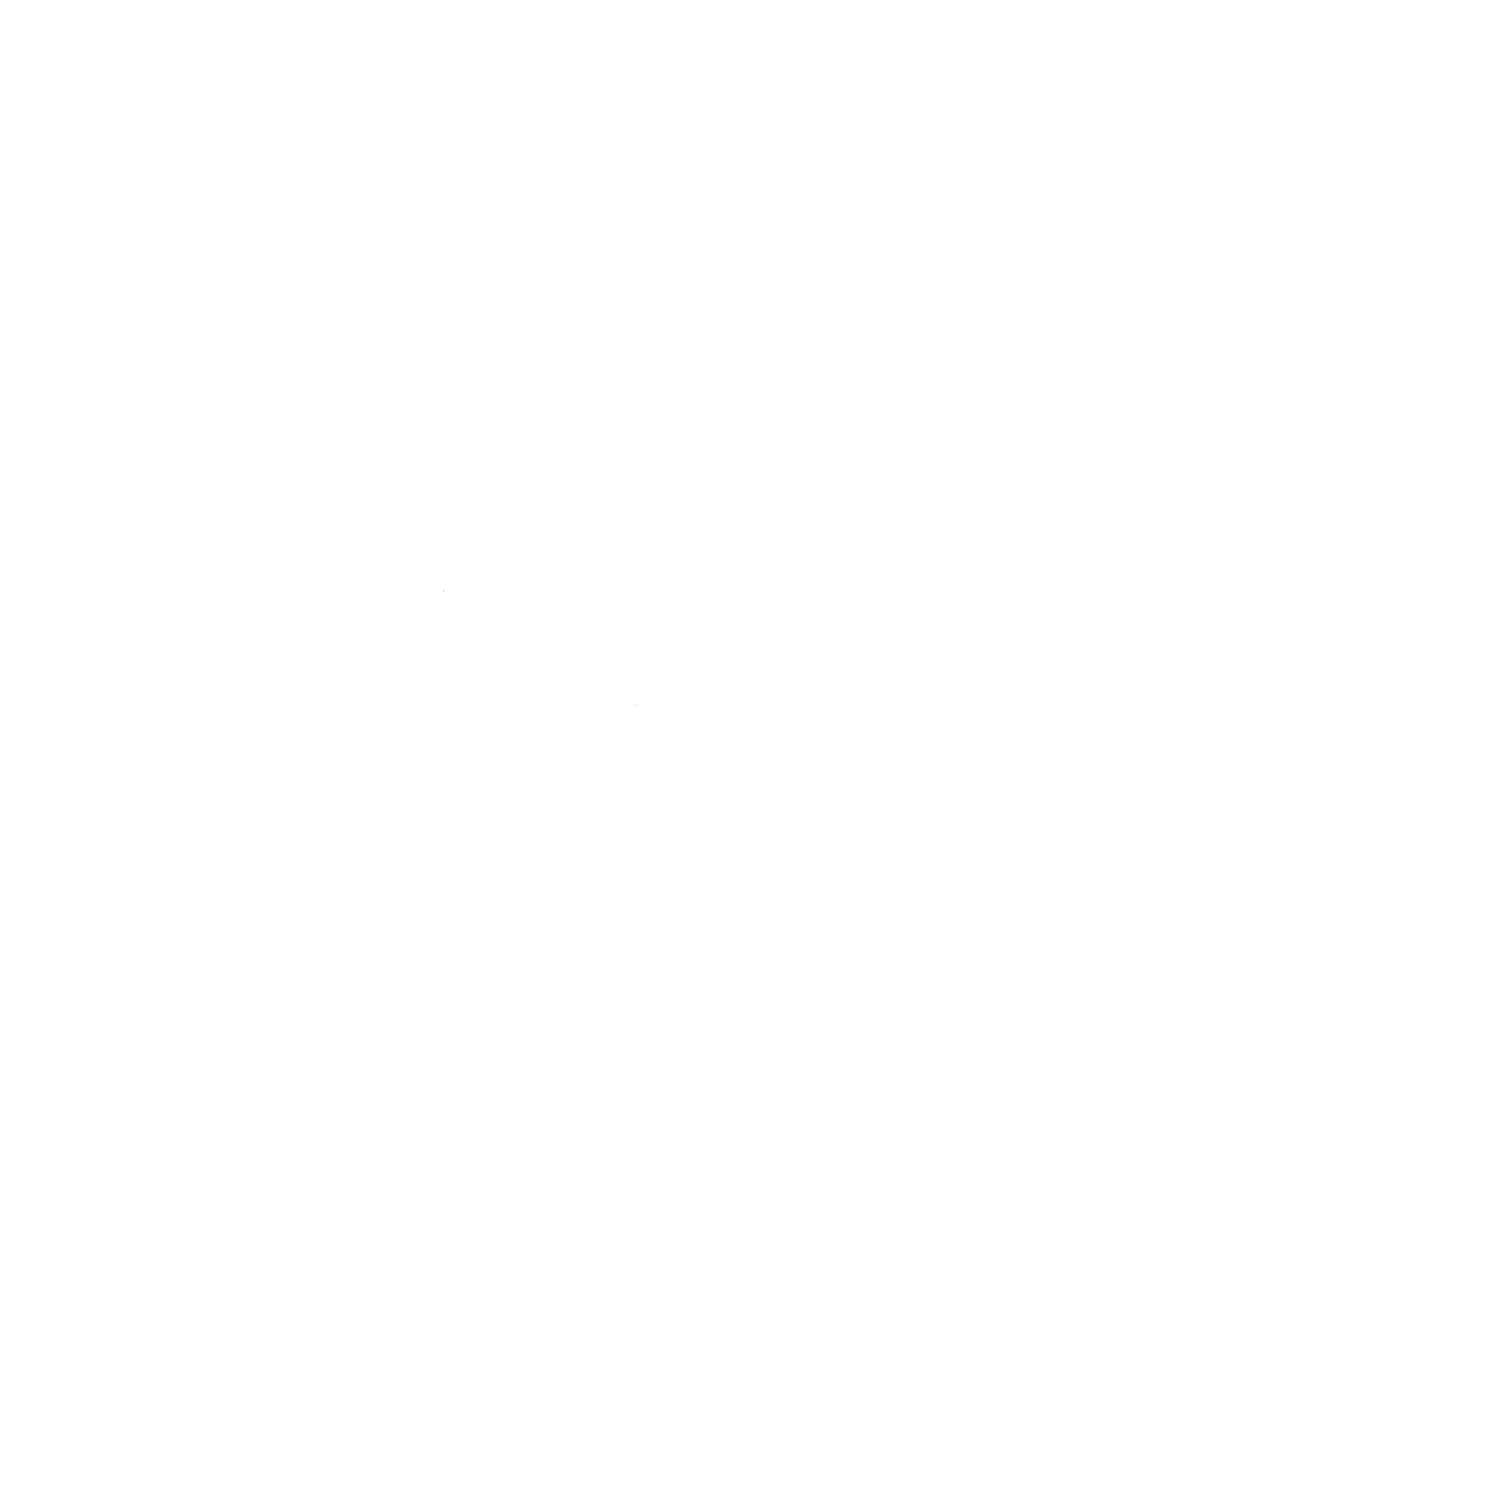 Connie Chen Master Penman 